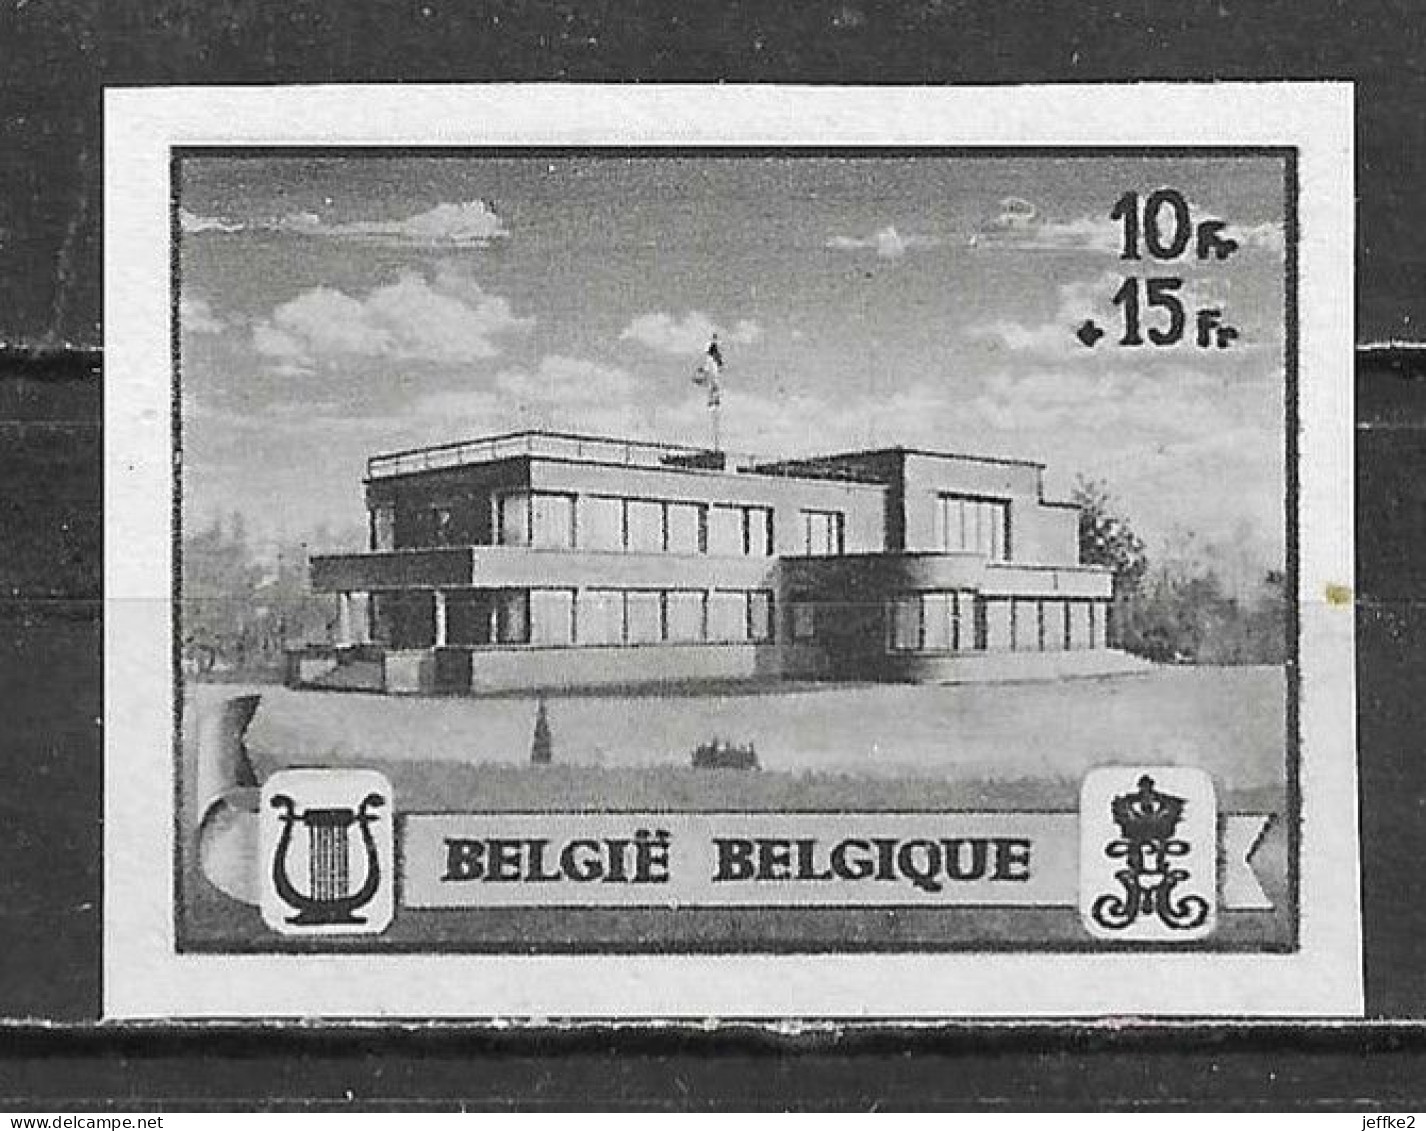 537B**  Chapelle Musicale - Bonne Valeur - MNH** - LOOK!!!! - Unused Stamps